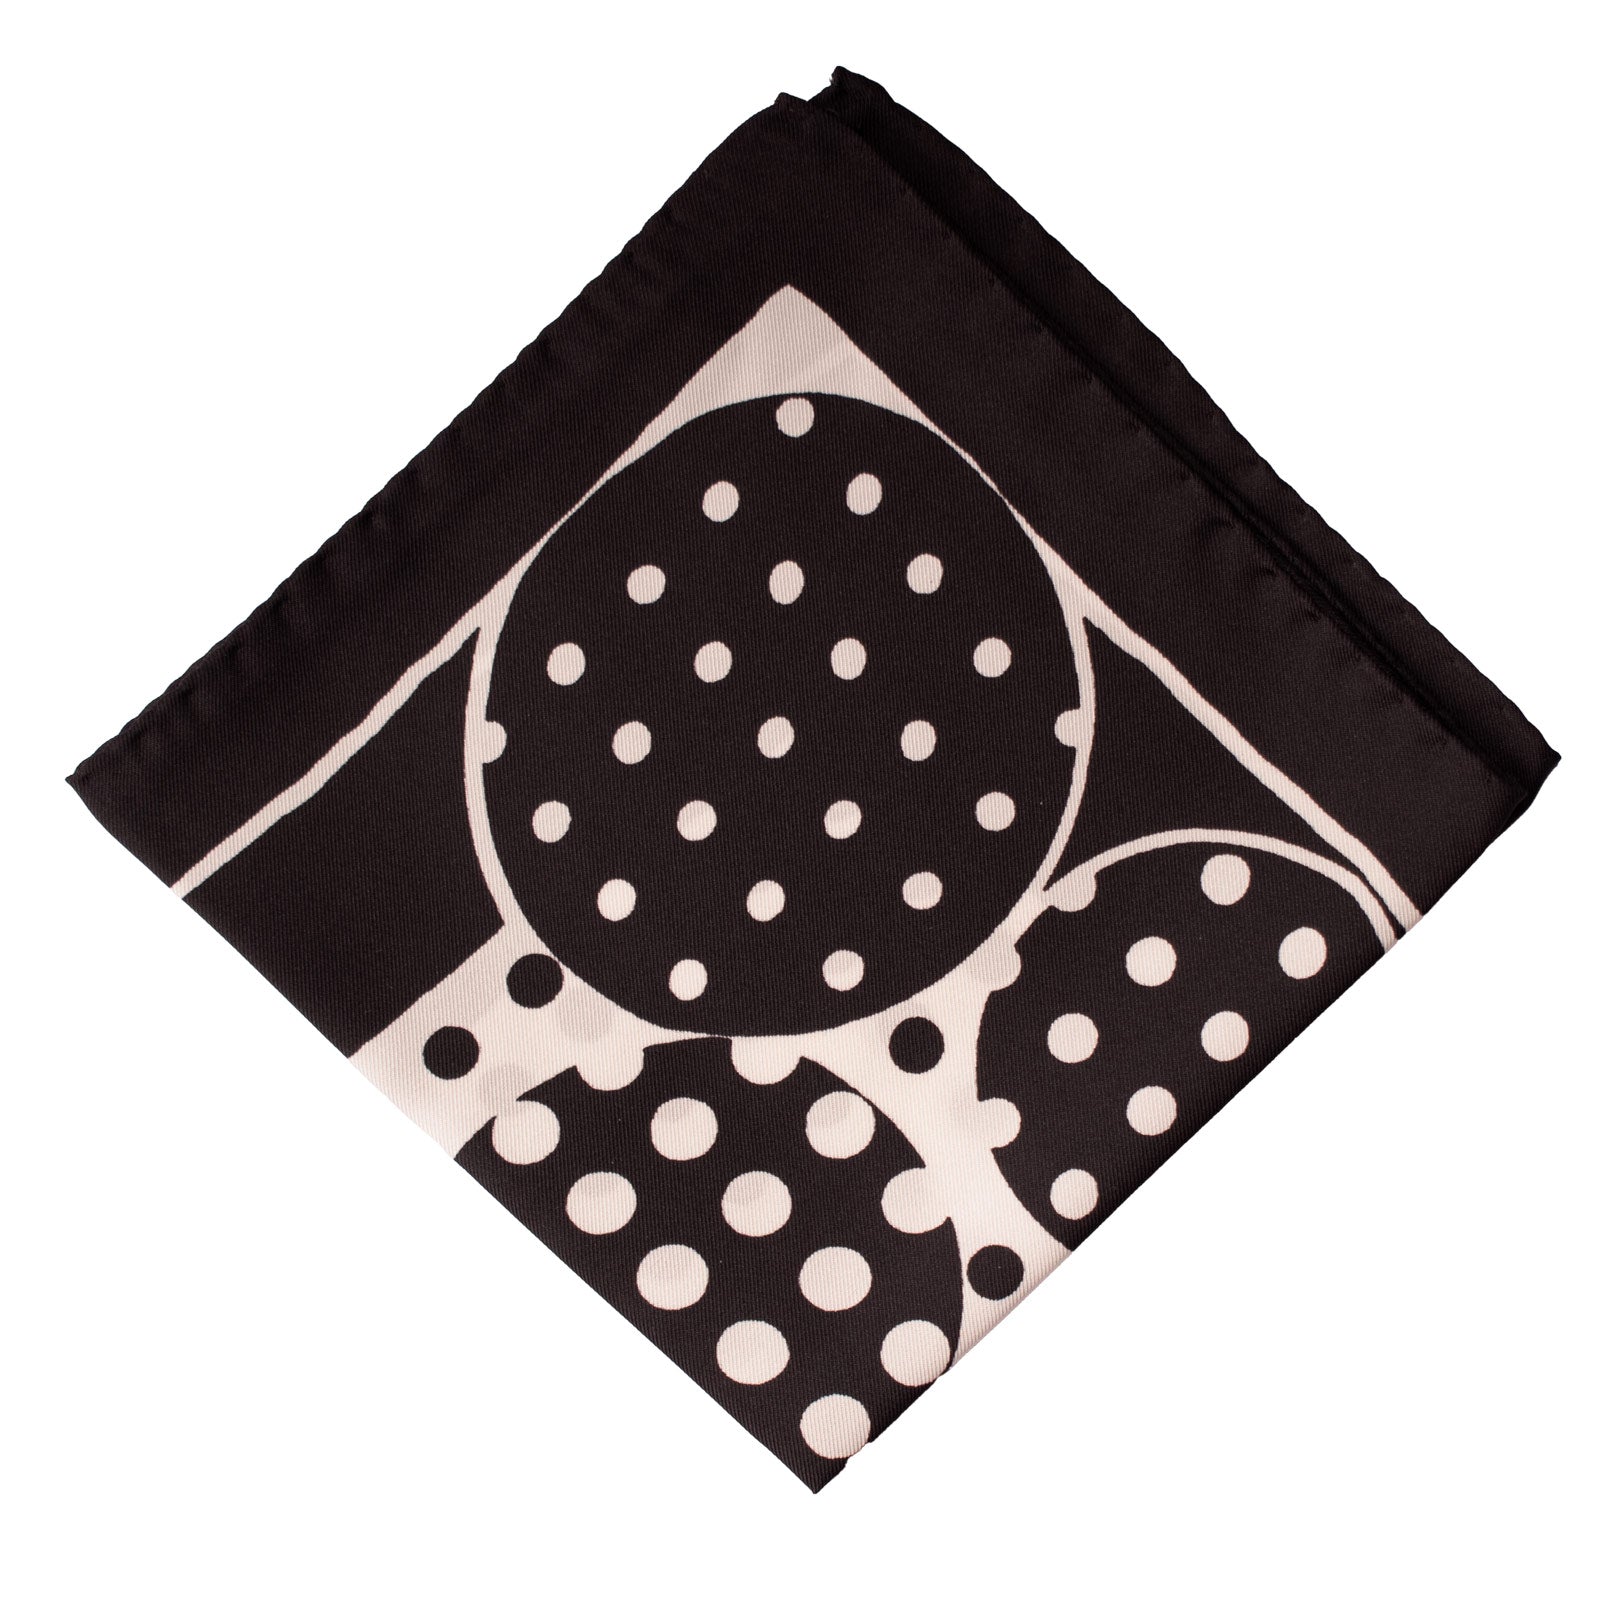 Fazzoletto da Taschino Vintage di Seta Nero Bianco a Pois POCV658 Piegata